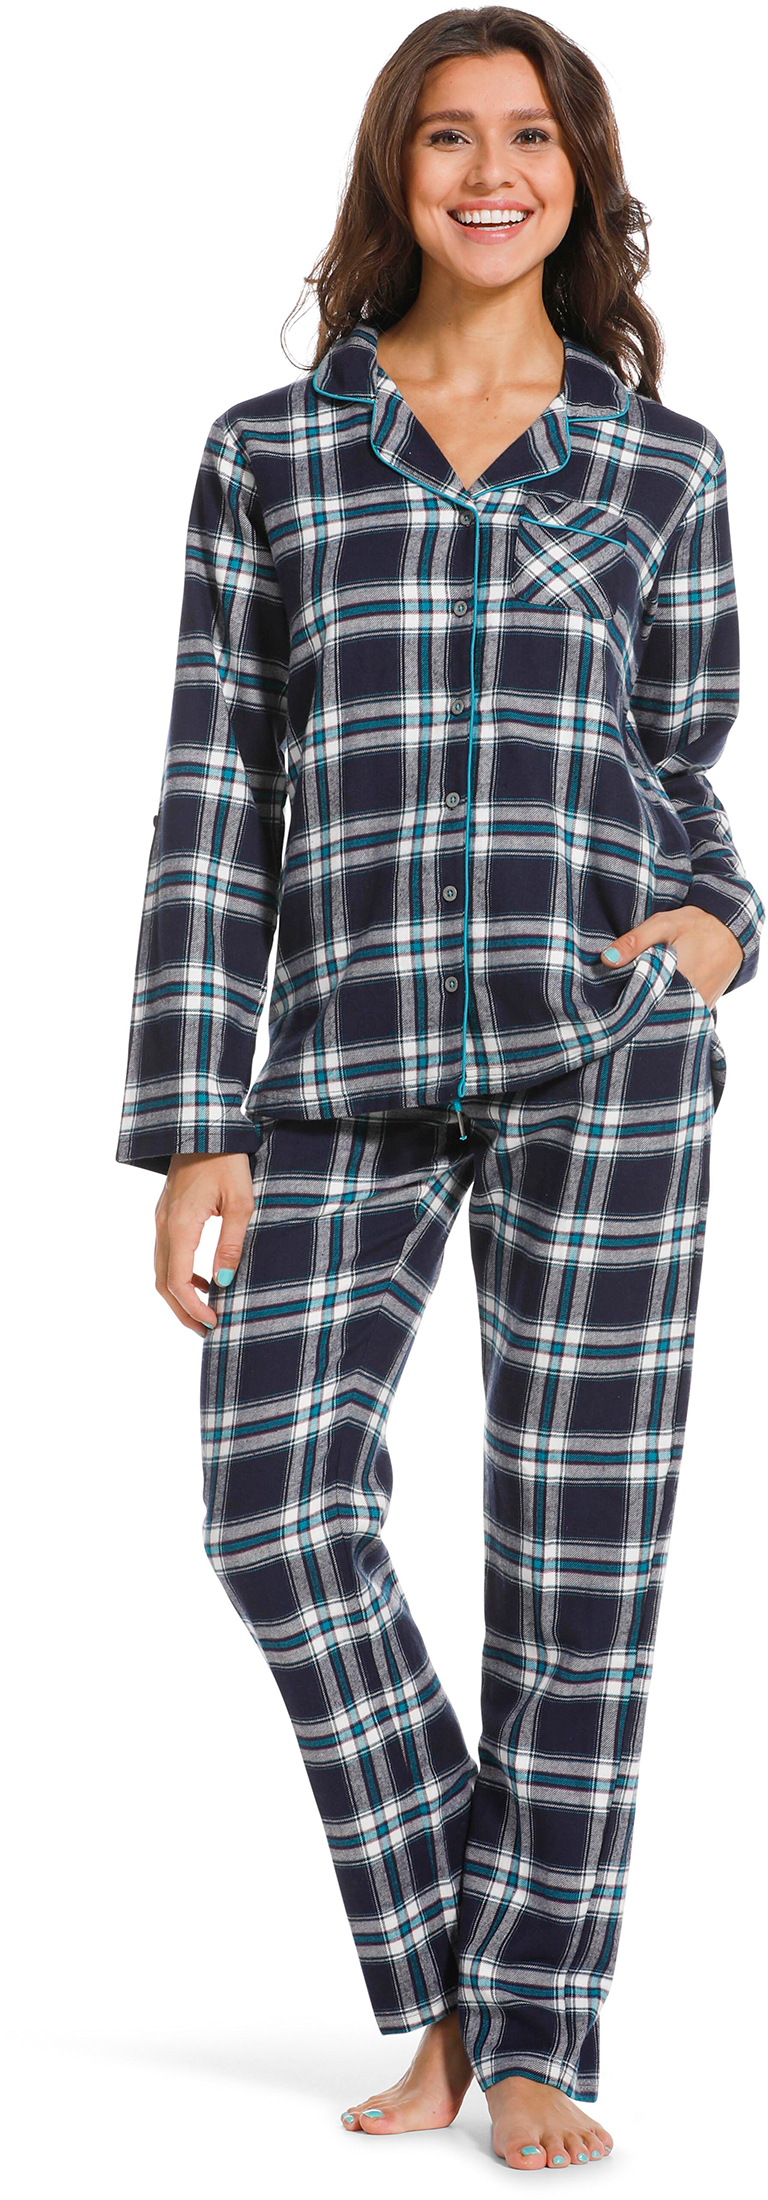 Rebelle dames pyjama flanel 21222-408-6 - Blauw - 44